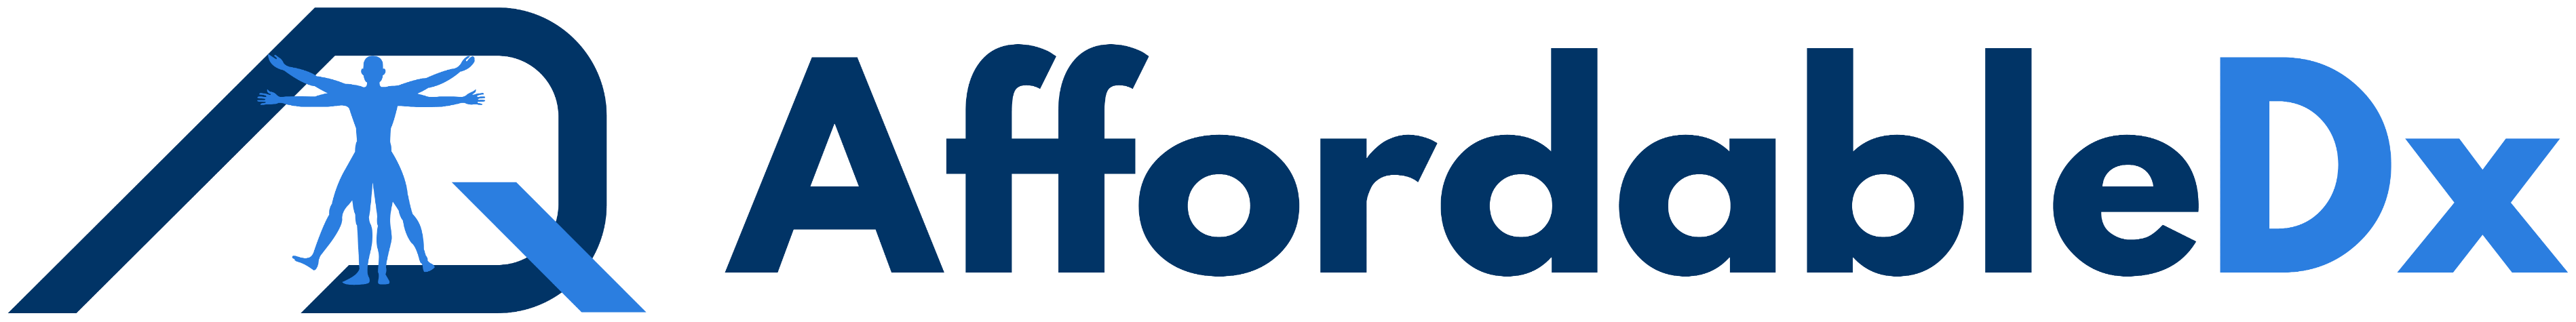 Brand logo footer